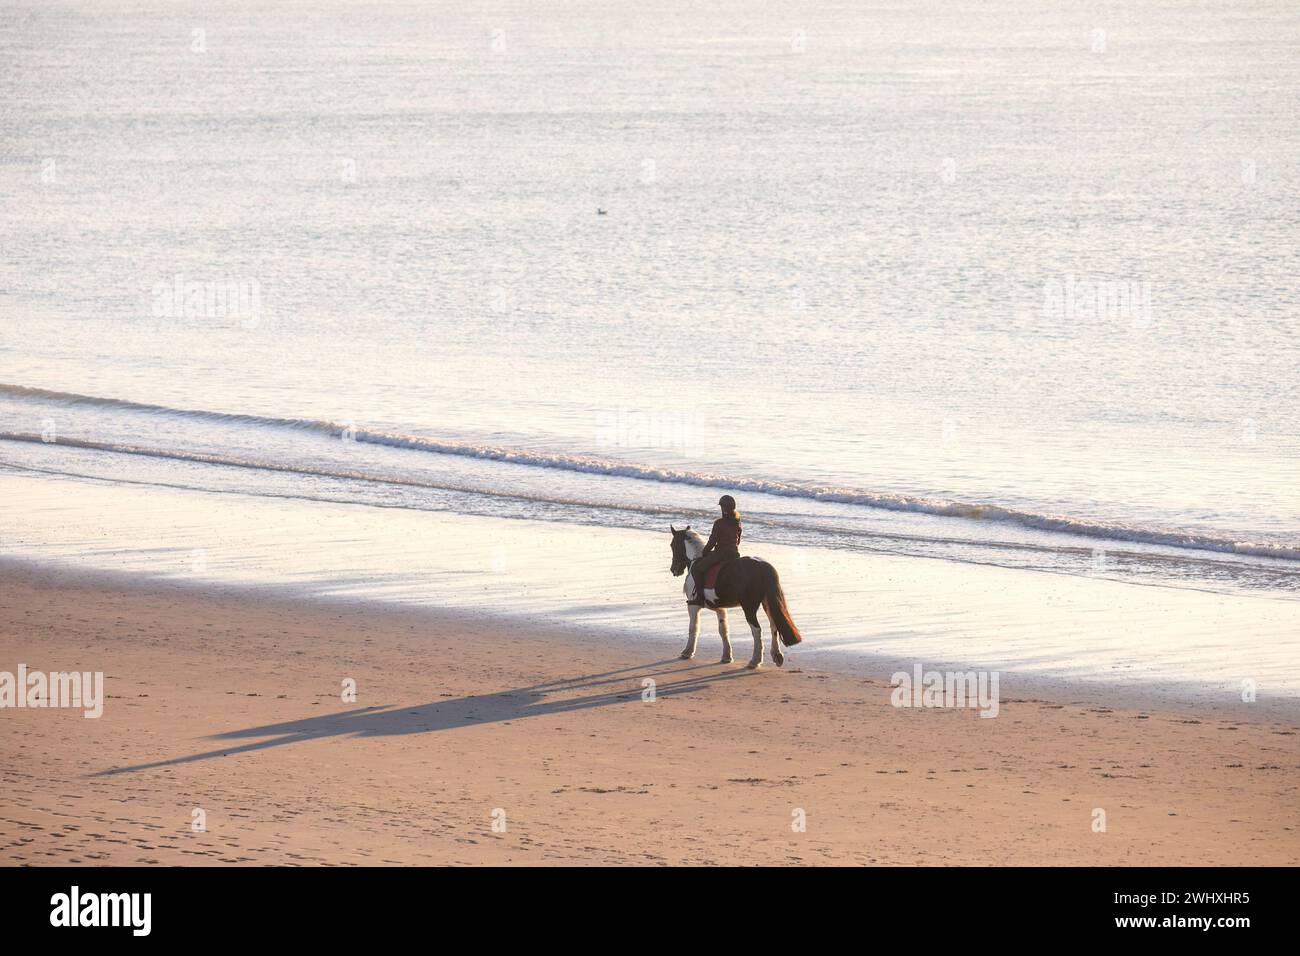 Woman riding horse on sea beach Stock Photo